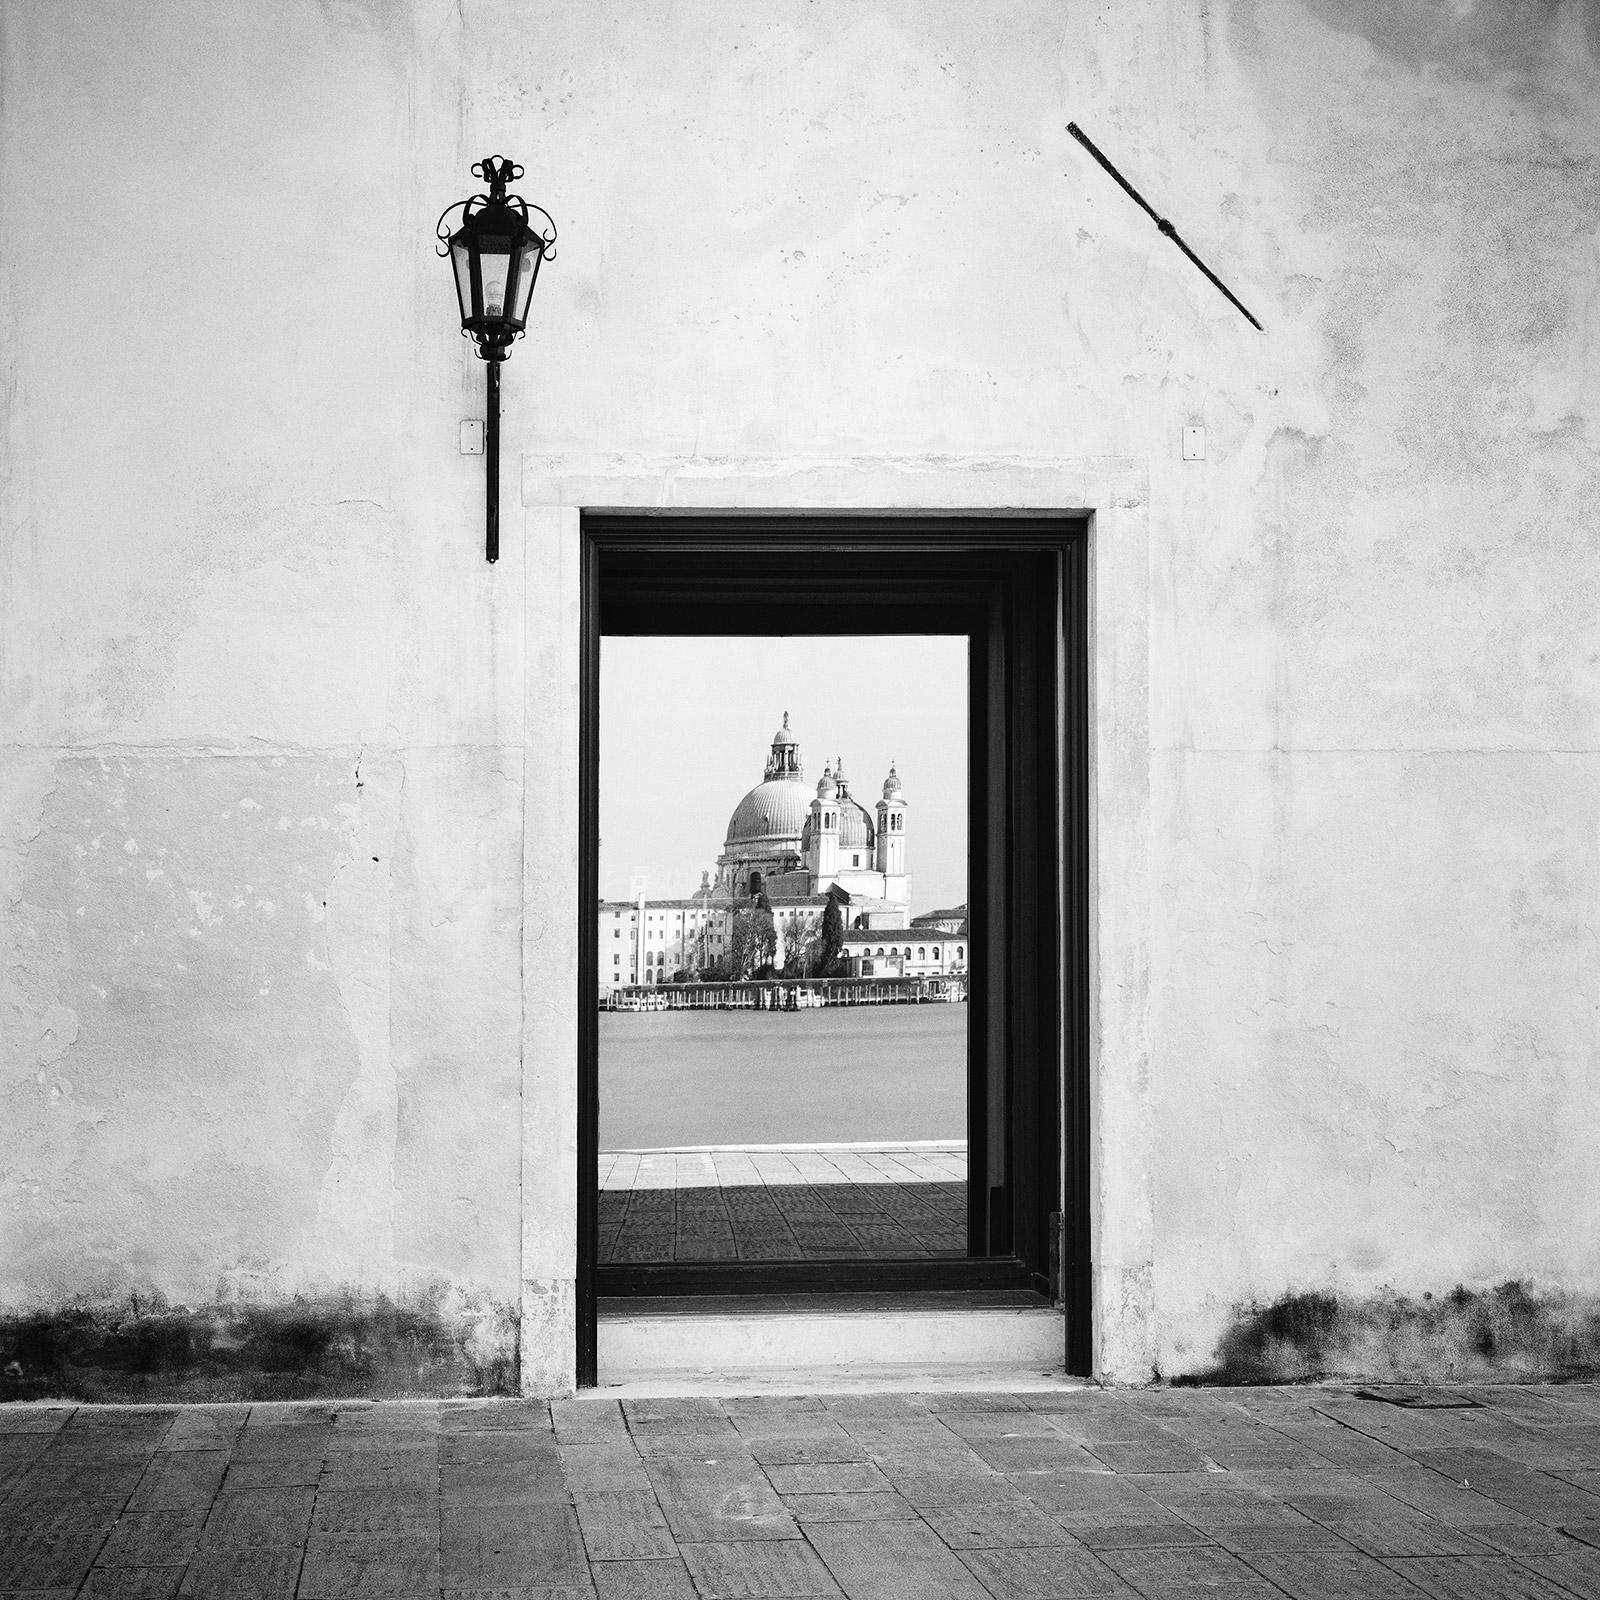 Reflection, Venice, Italy, black and white fine art landscape photography print